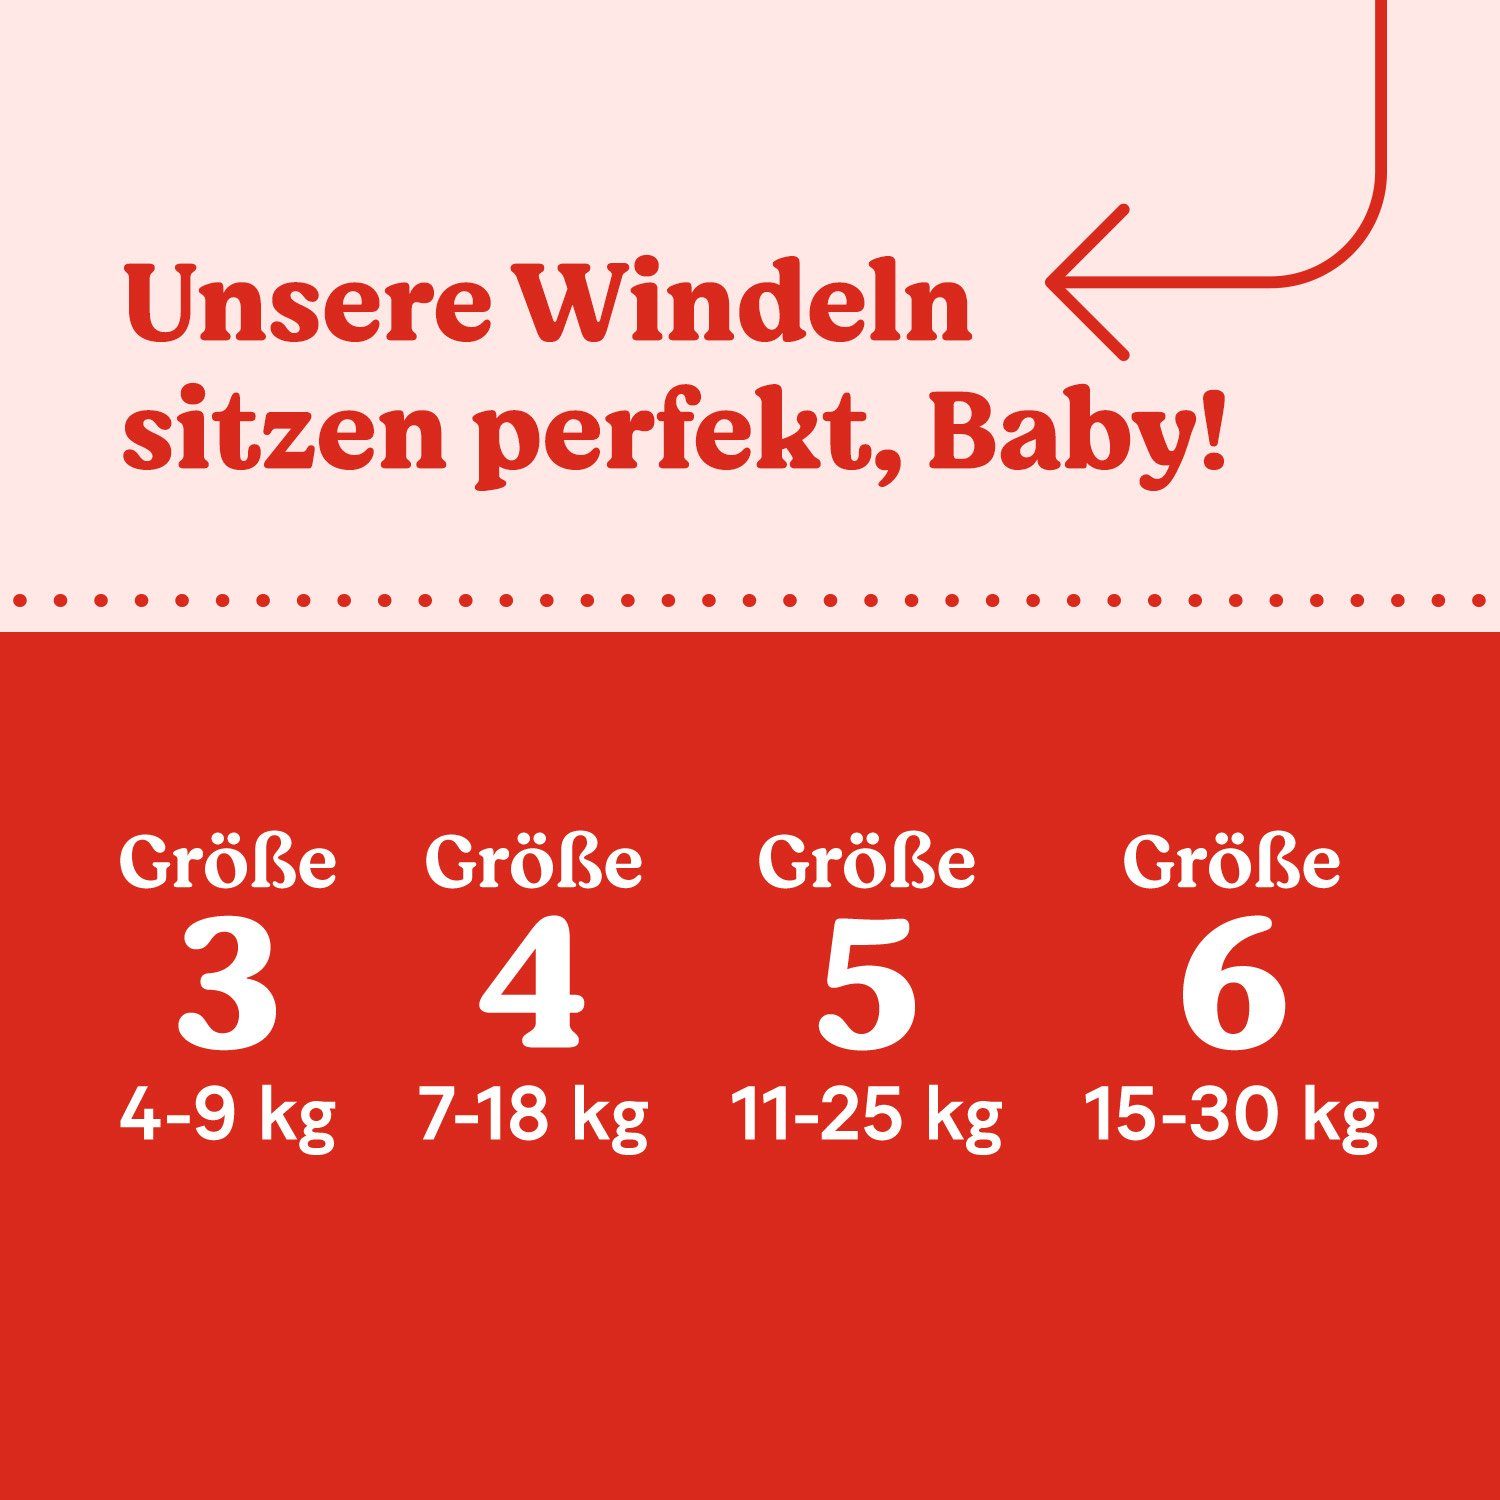 Größe 150 kg), Ultra Windeln Comfort HUGGIES 4 Babywindeln, (7-18 Monatsbox, Windeln